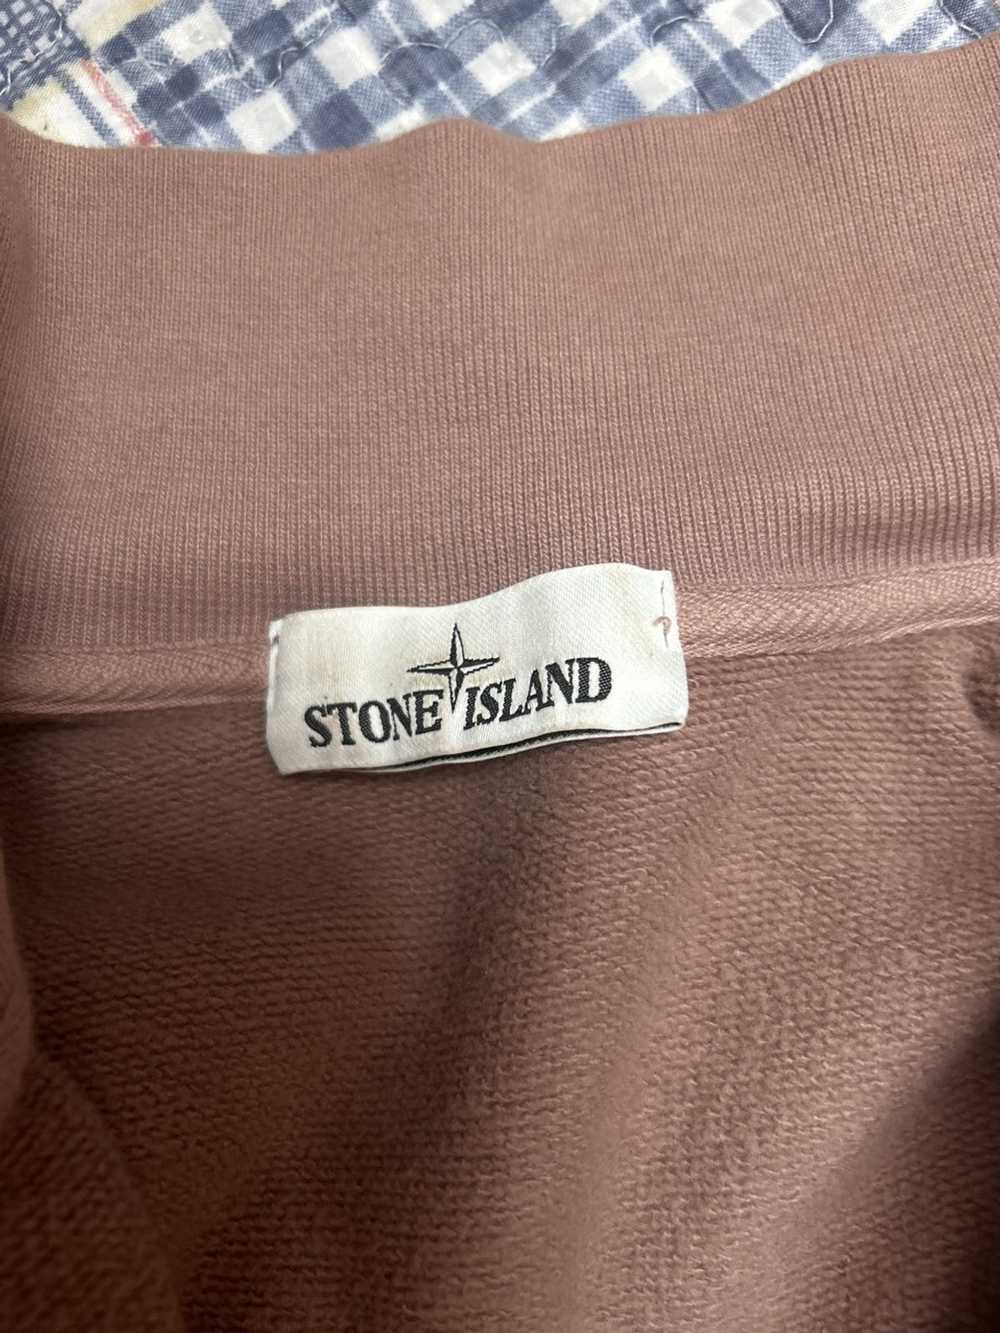 Stone Island Stone island half zip sweatshirt - image 5